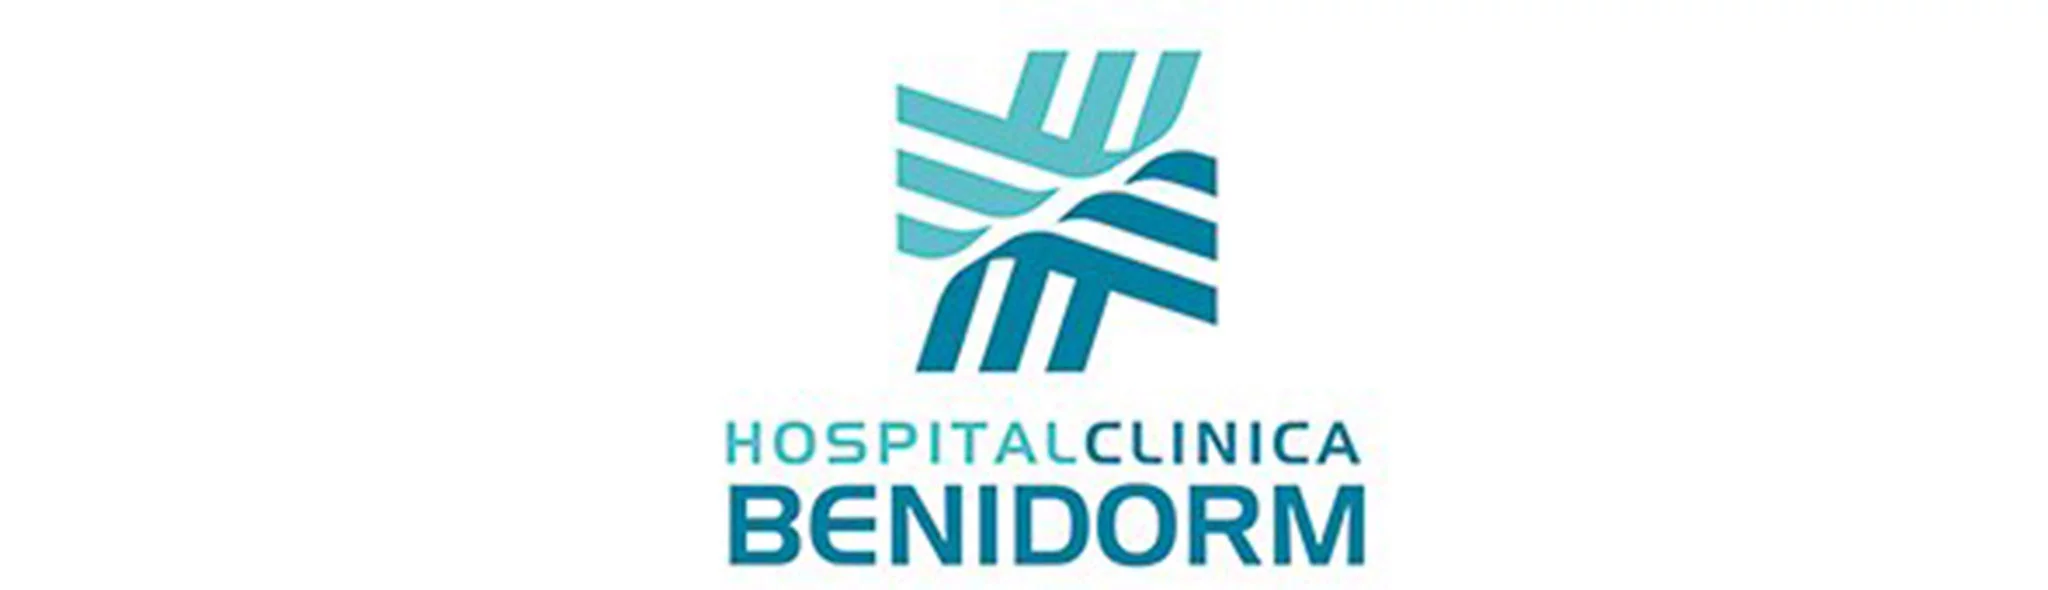 Logotipo de Hospital Clínica Benidorm (HCB)